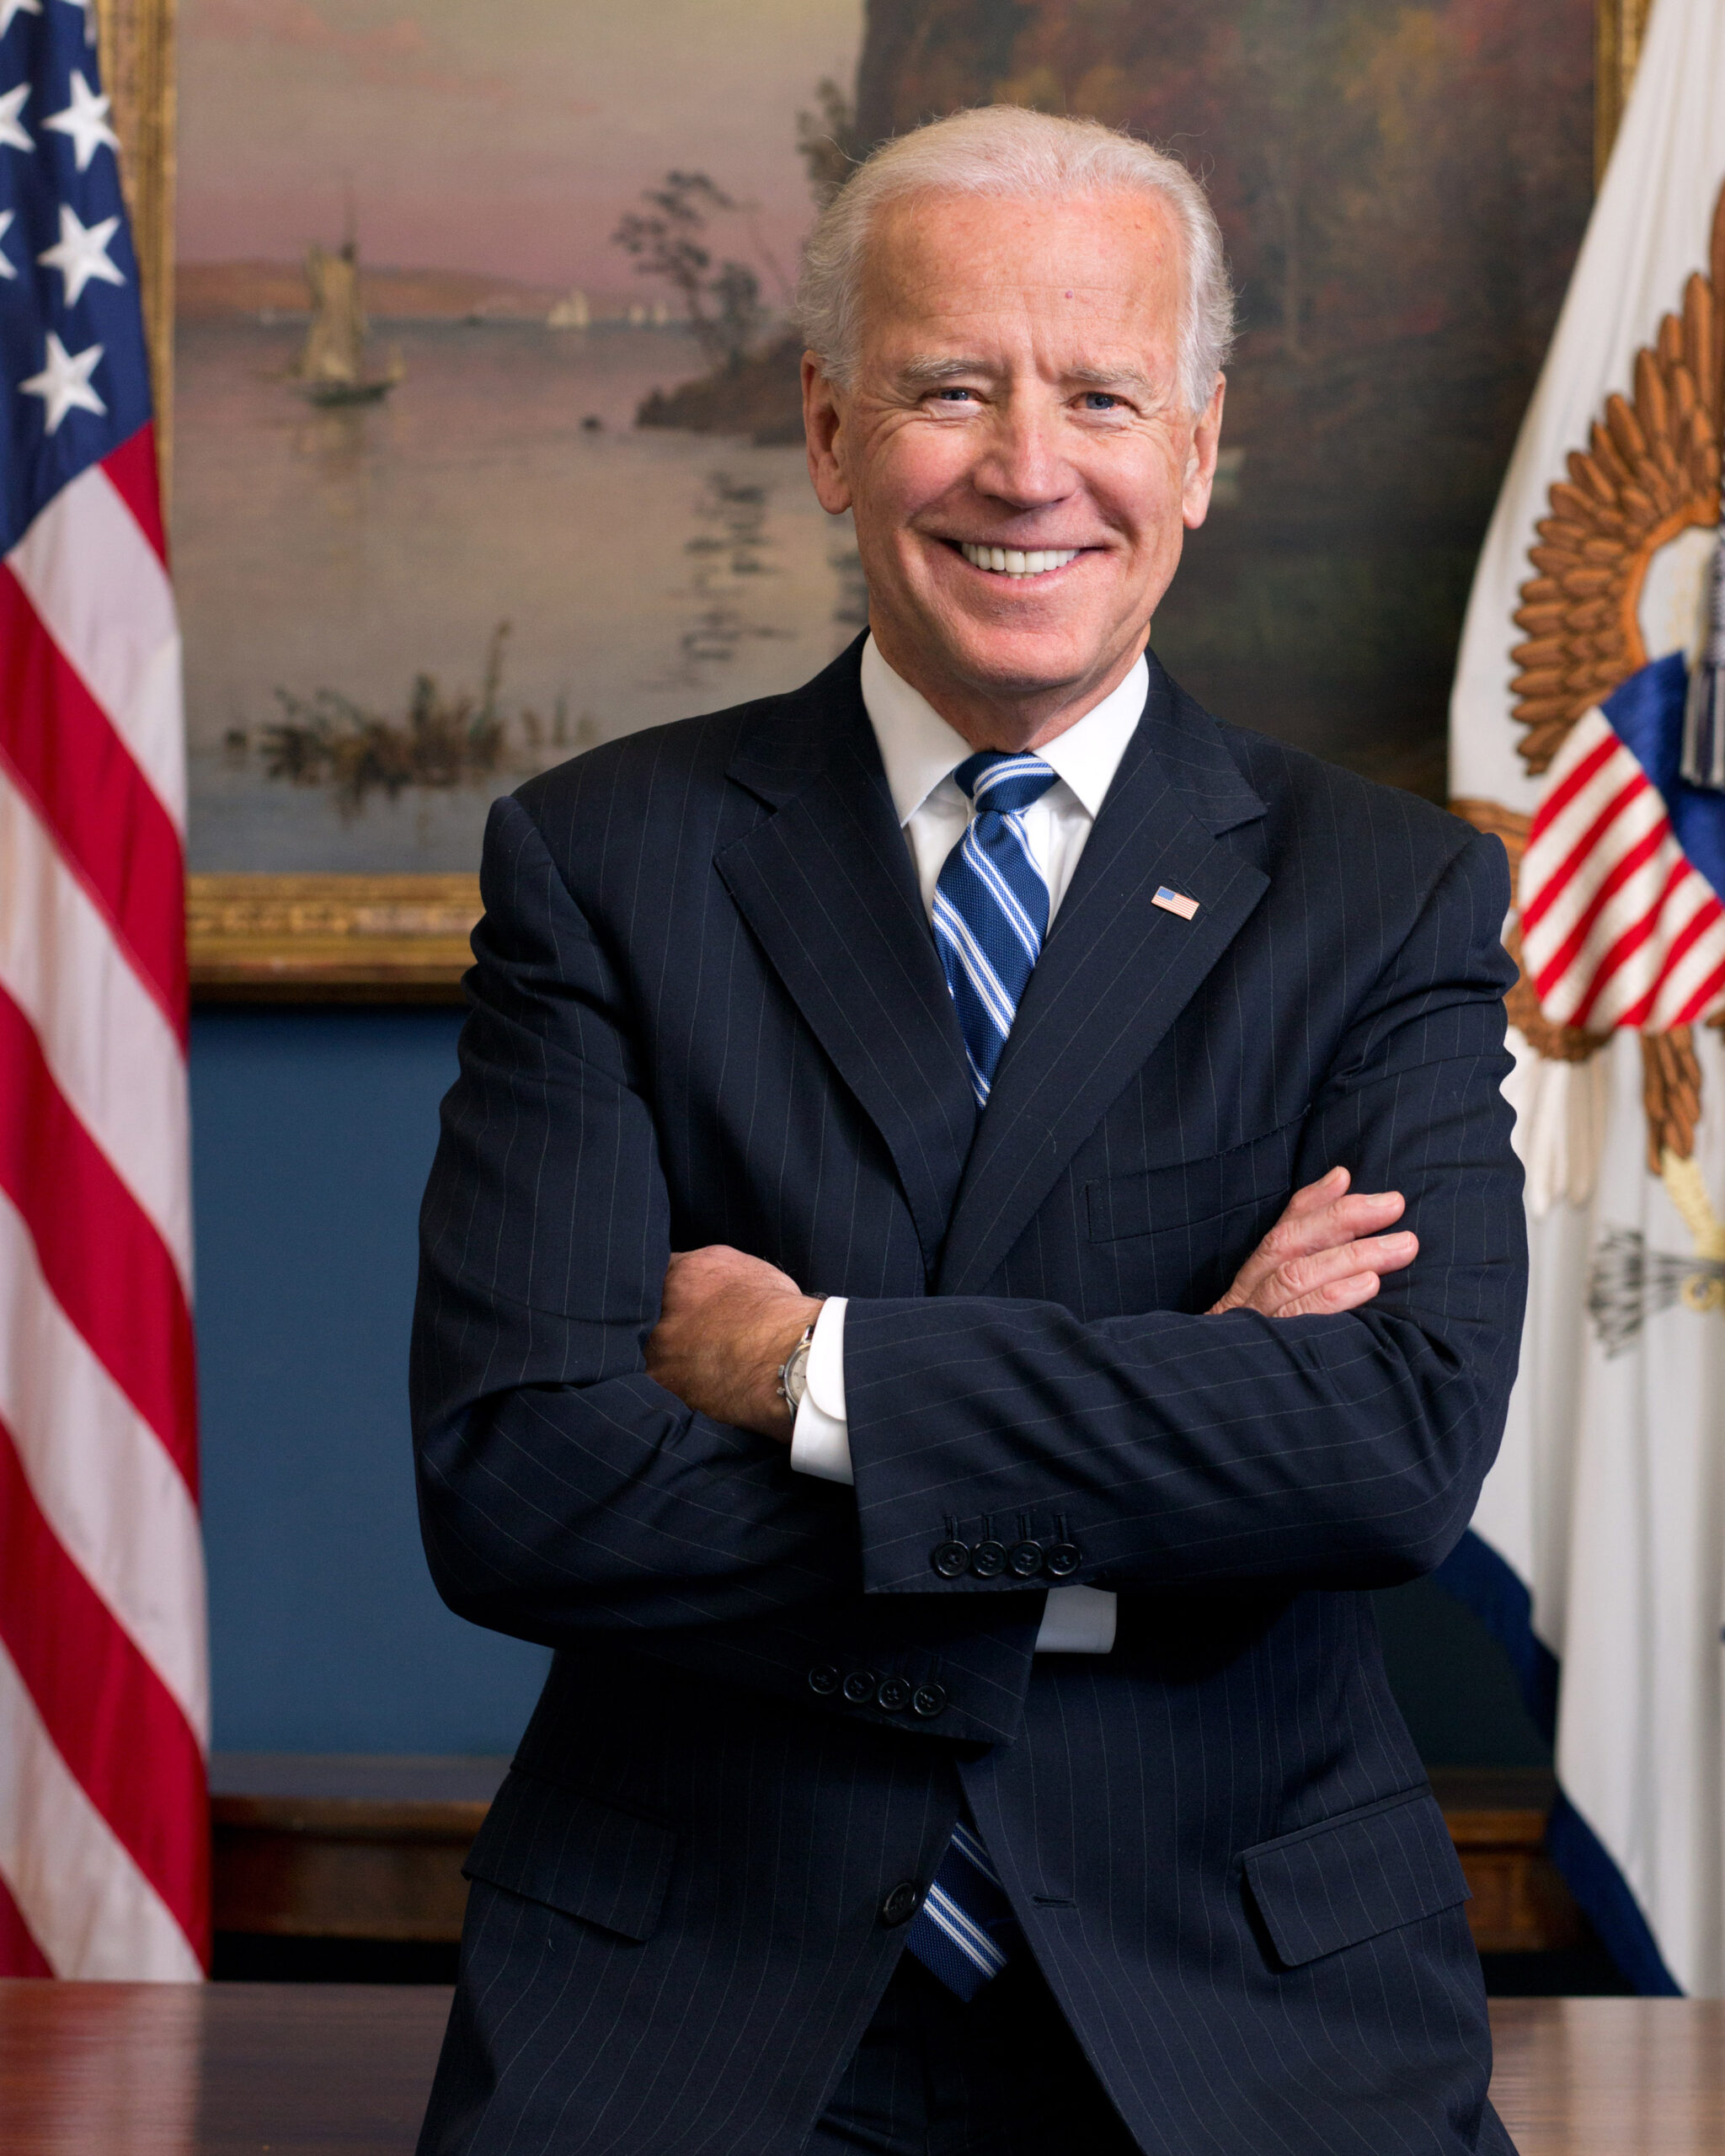 Joe_Biden_official_portrait_2013